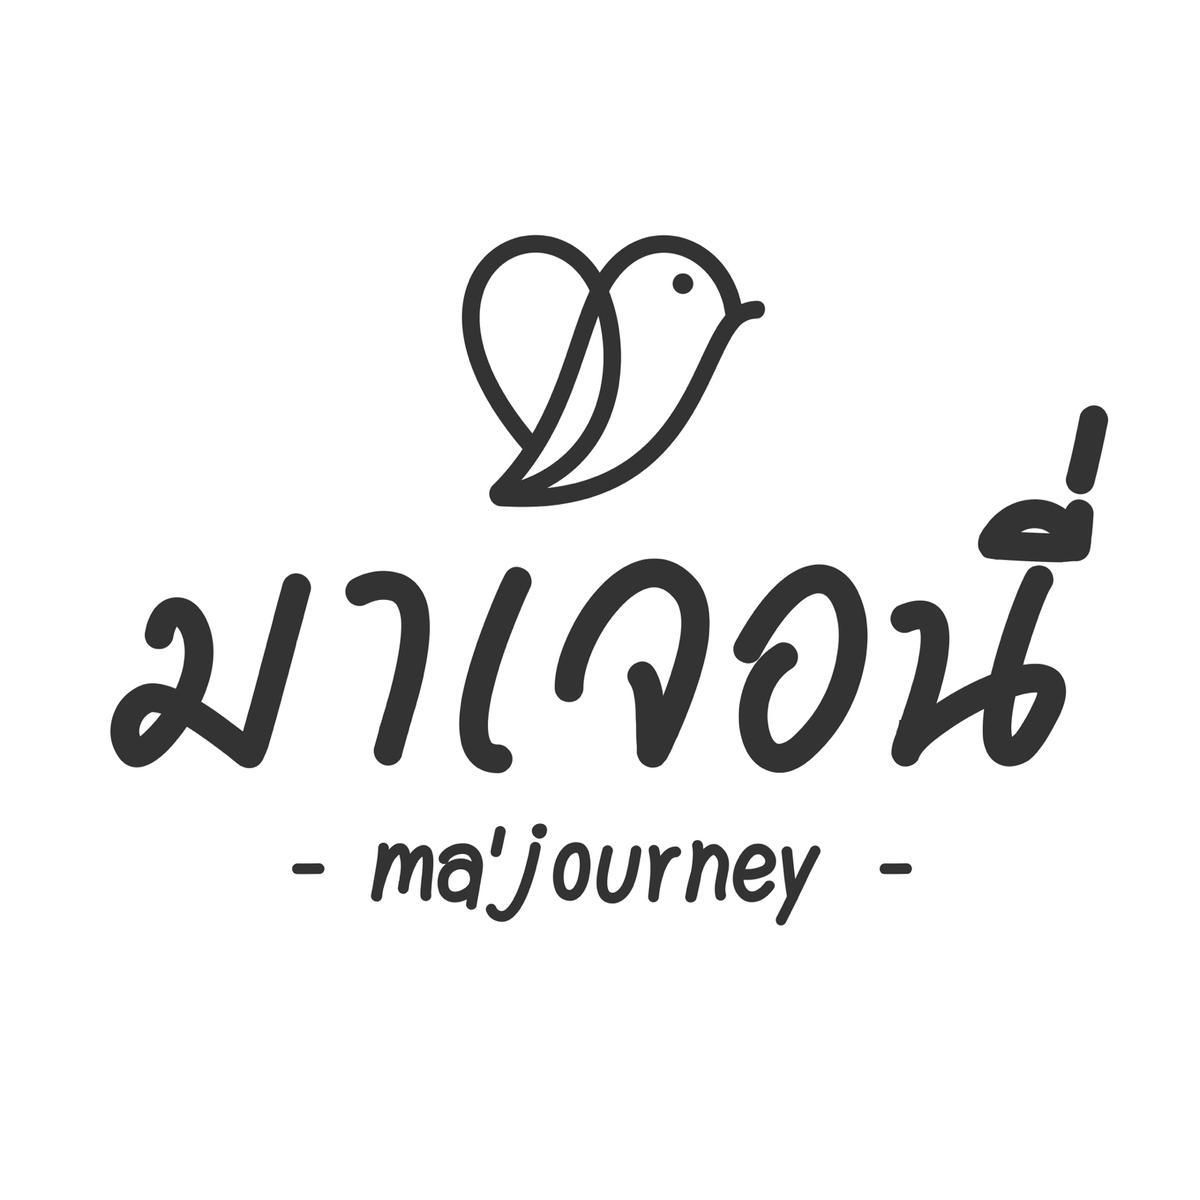 ma’journey